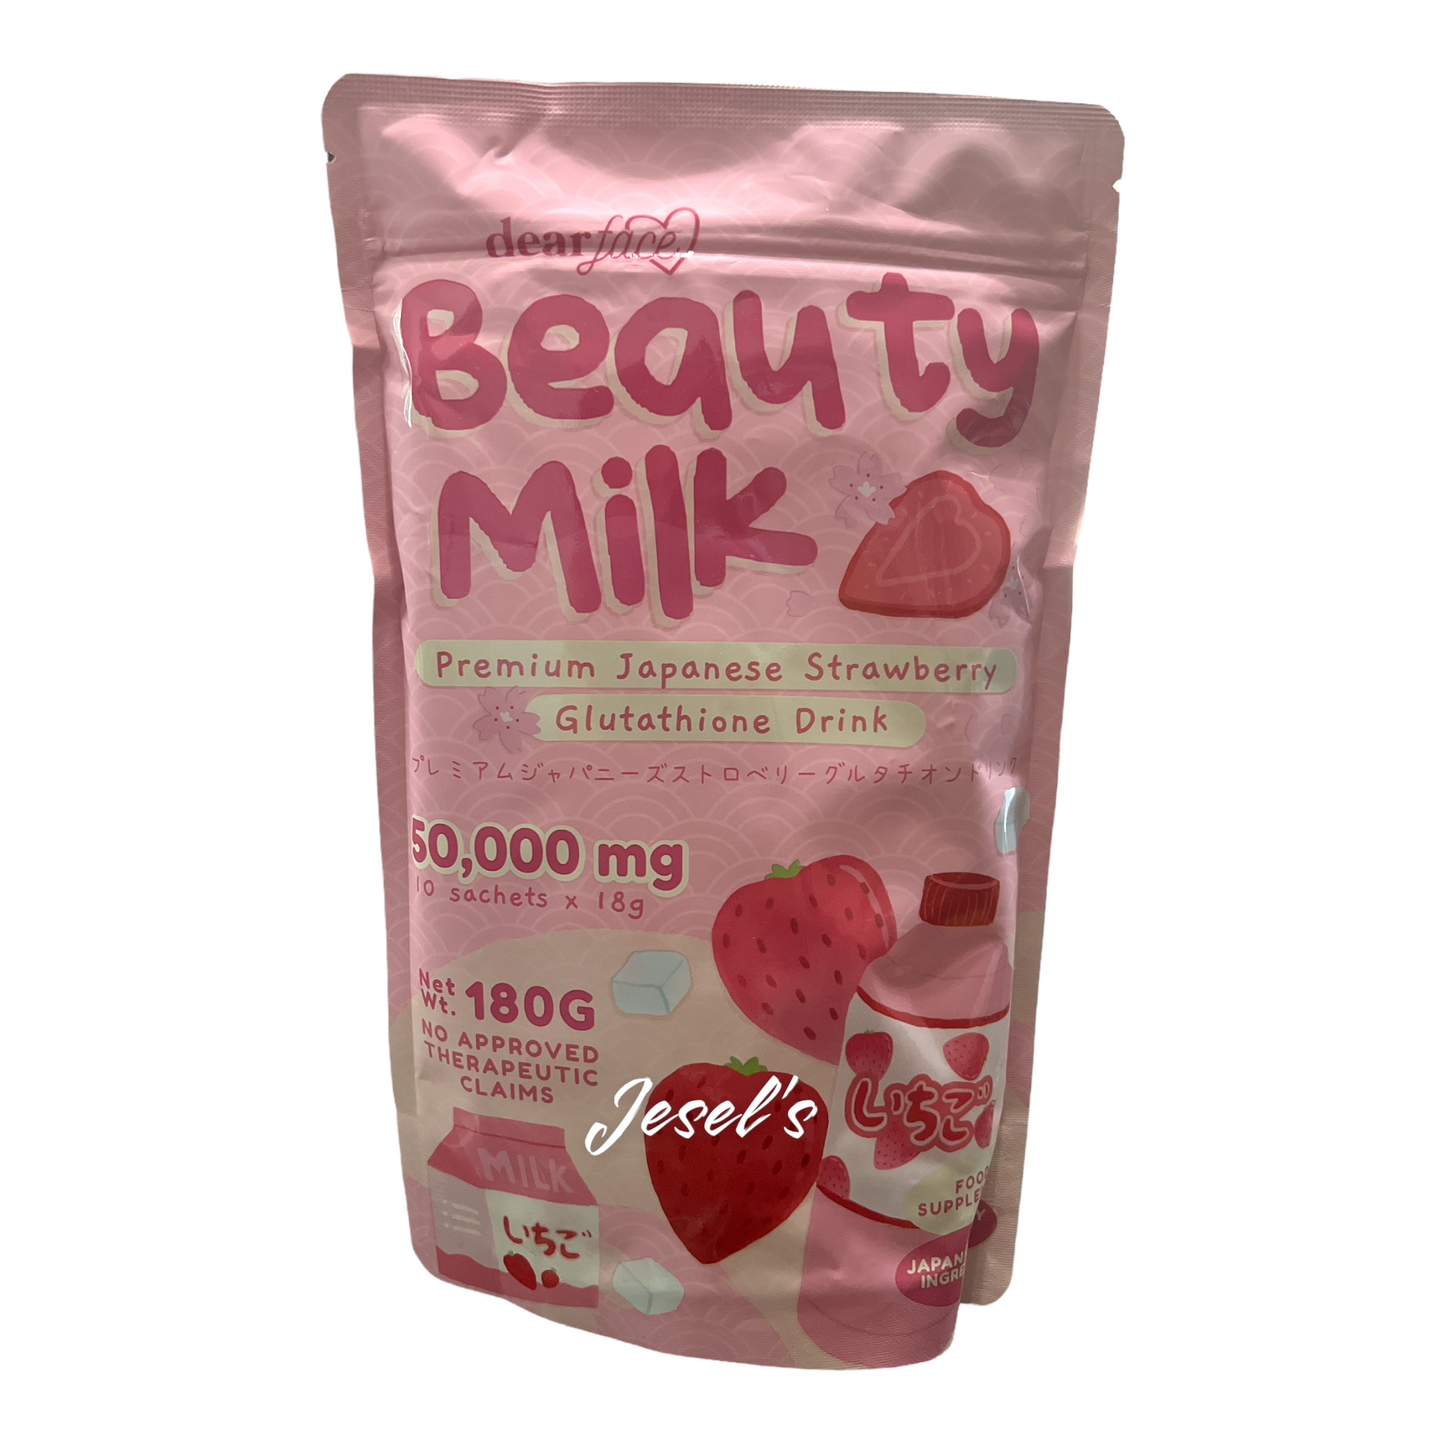 Dear face Beauty Milk Strawberry Flavor